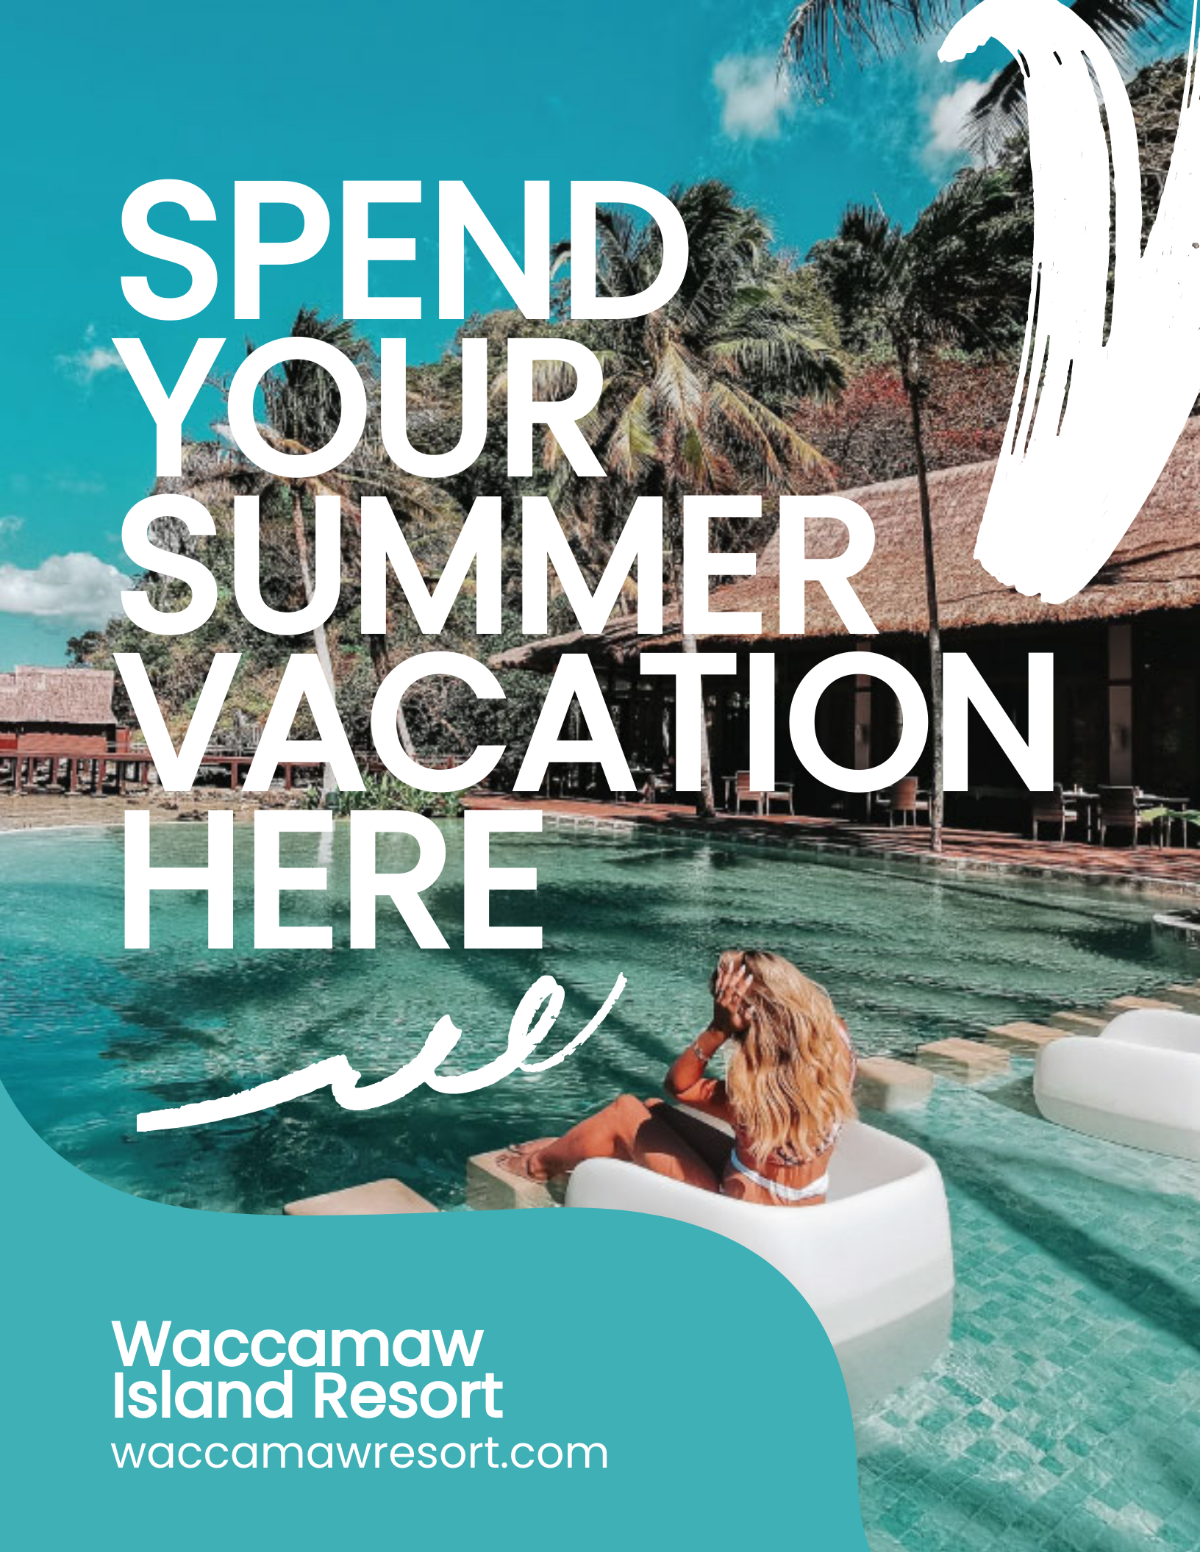 Summer Vacation Flyer Template